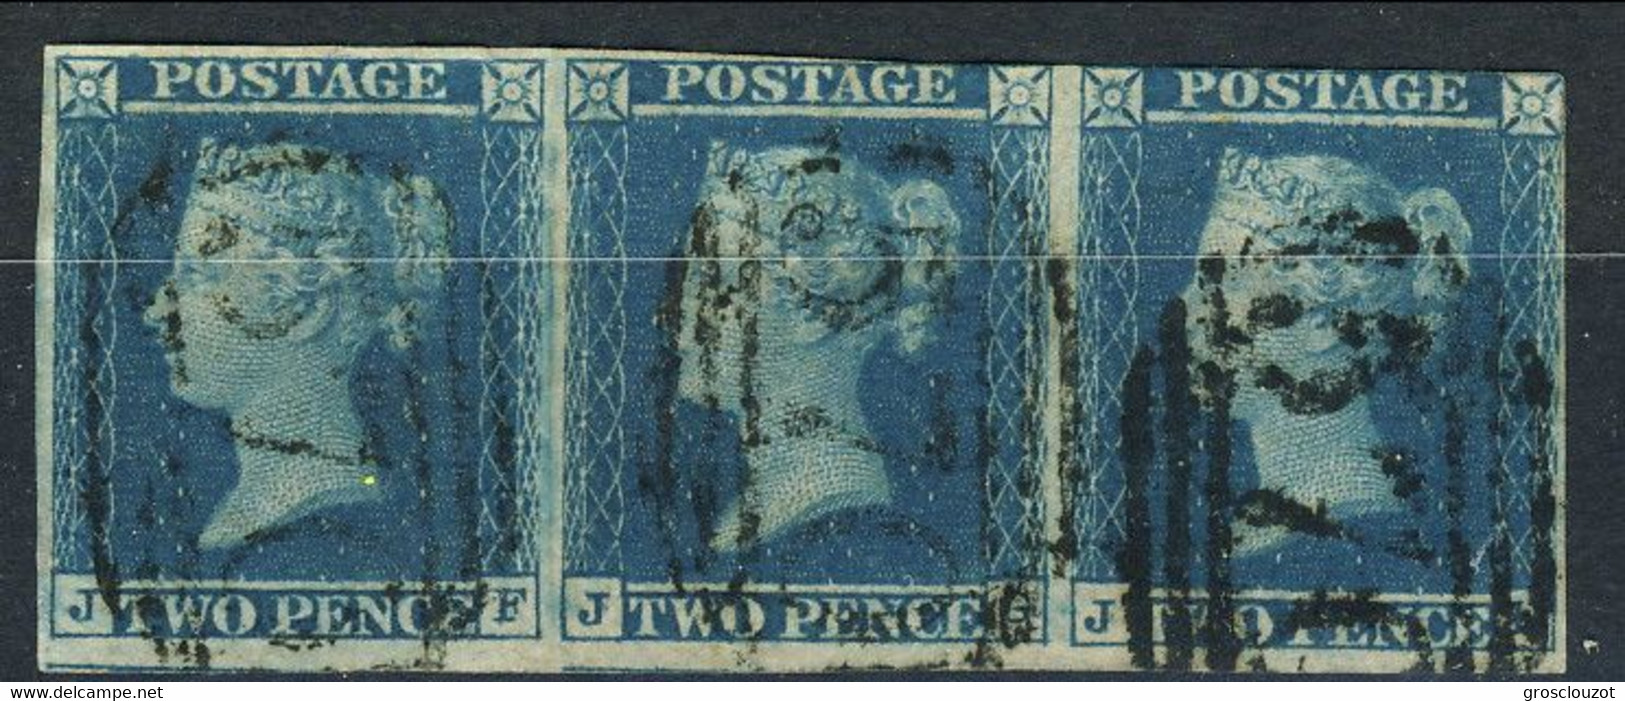 GB 1841 SG N. 14 - PENNY BLUE Rara Striscia Di 3,  Lettere JF, JG, GH, Grandi Margini, Usata Firma E. Diena - Used Stamps